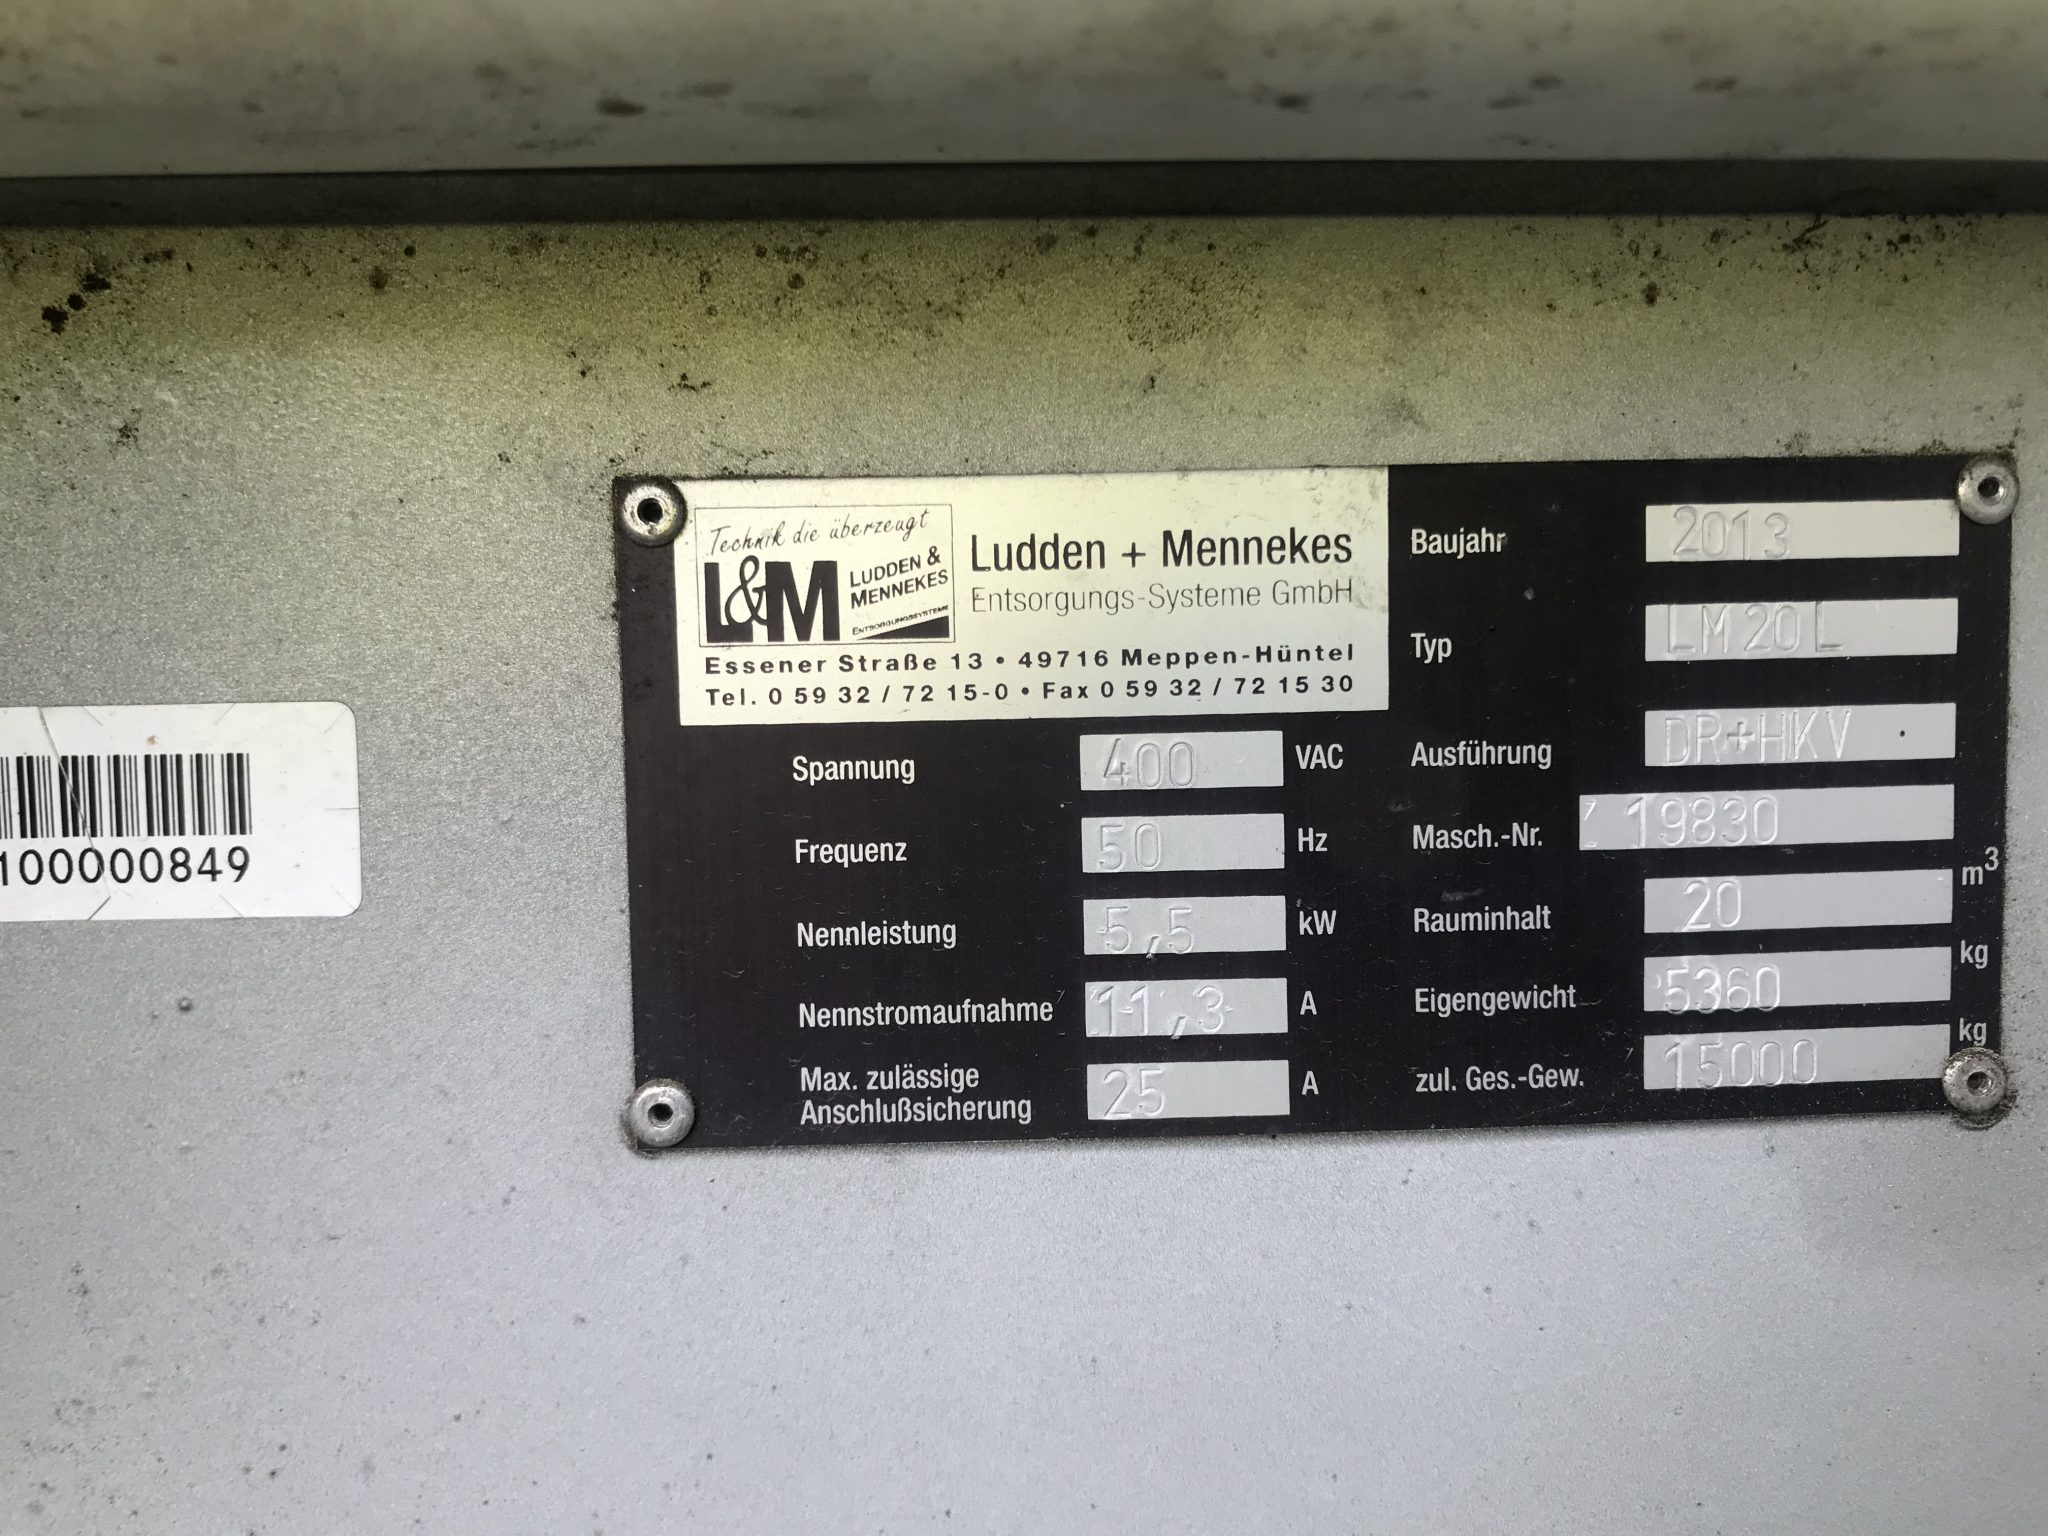 IMG 2520 scaled - Presscontainer LM 20 L L&M BJ 2013 #19830 mit integr. HKV